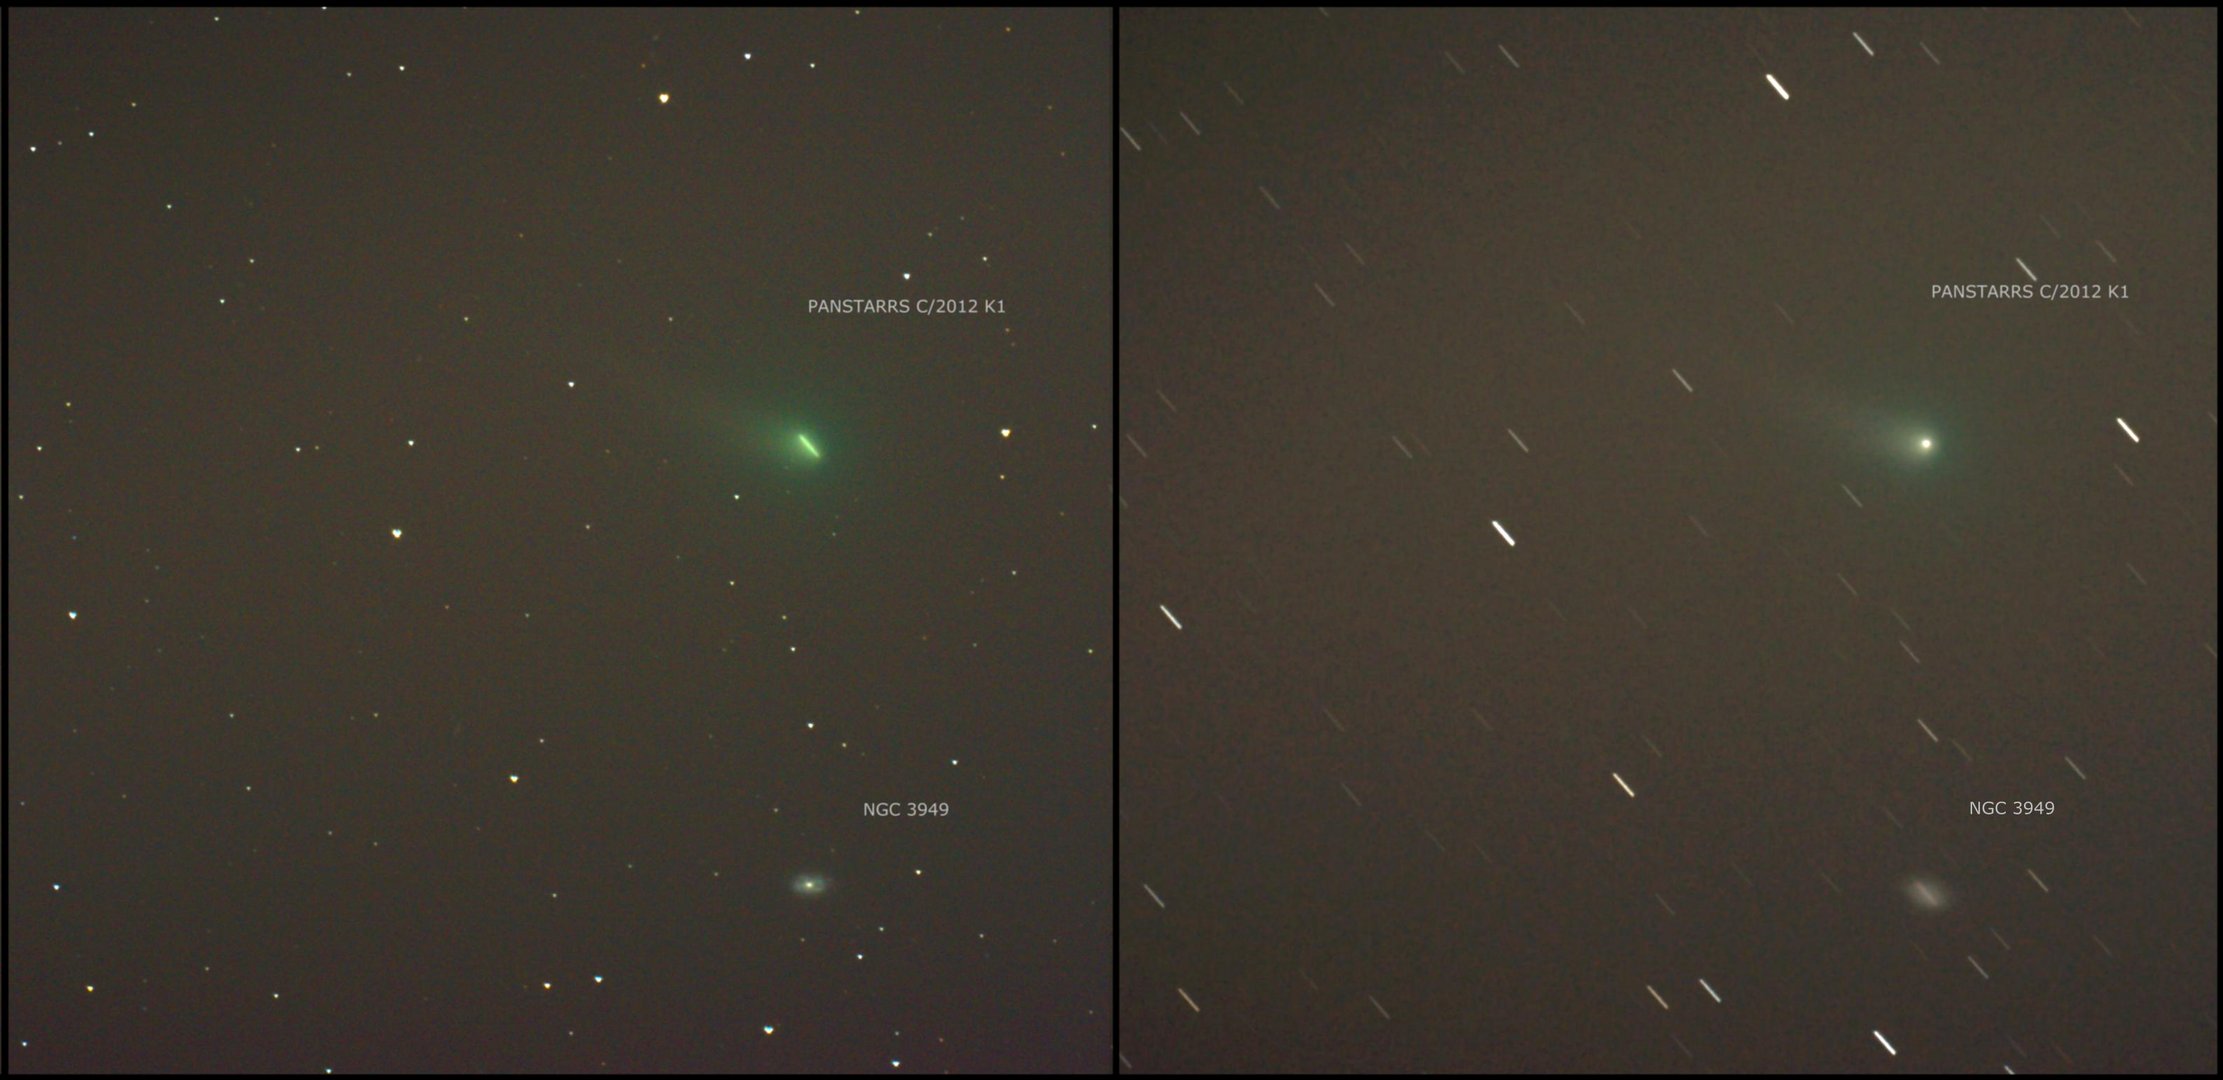 PANSTARRS C/2012 K1 und NGC 3949